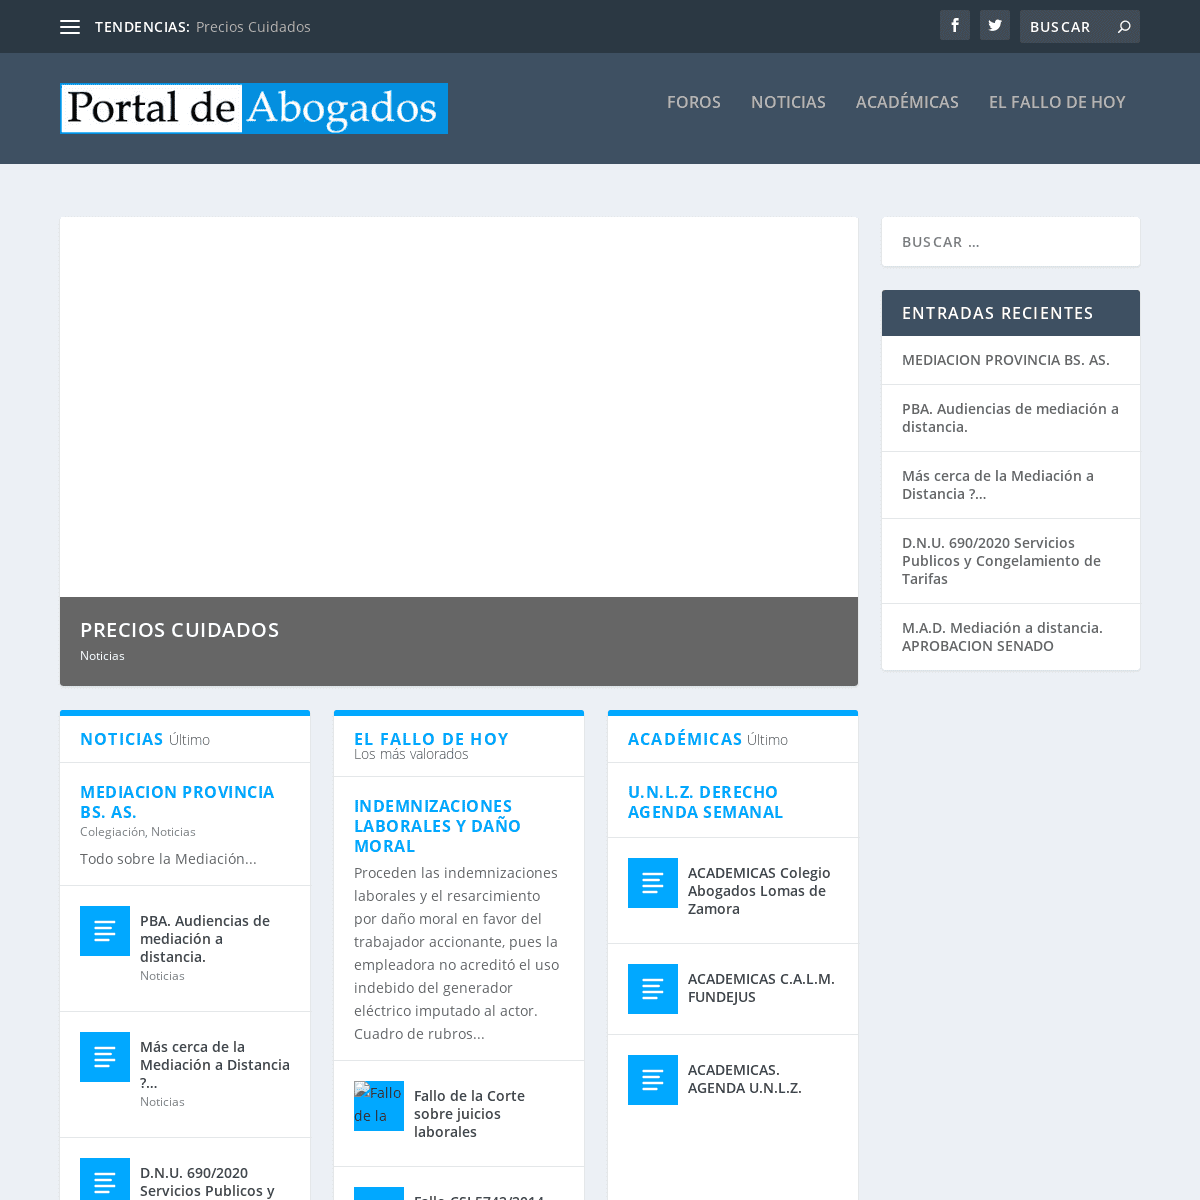 A complete backup of https://portaldeabogados.com